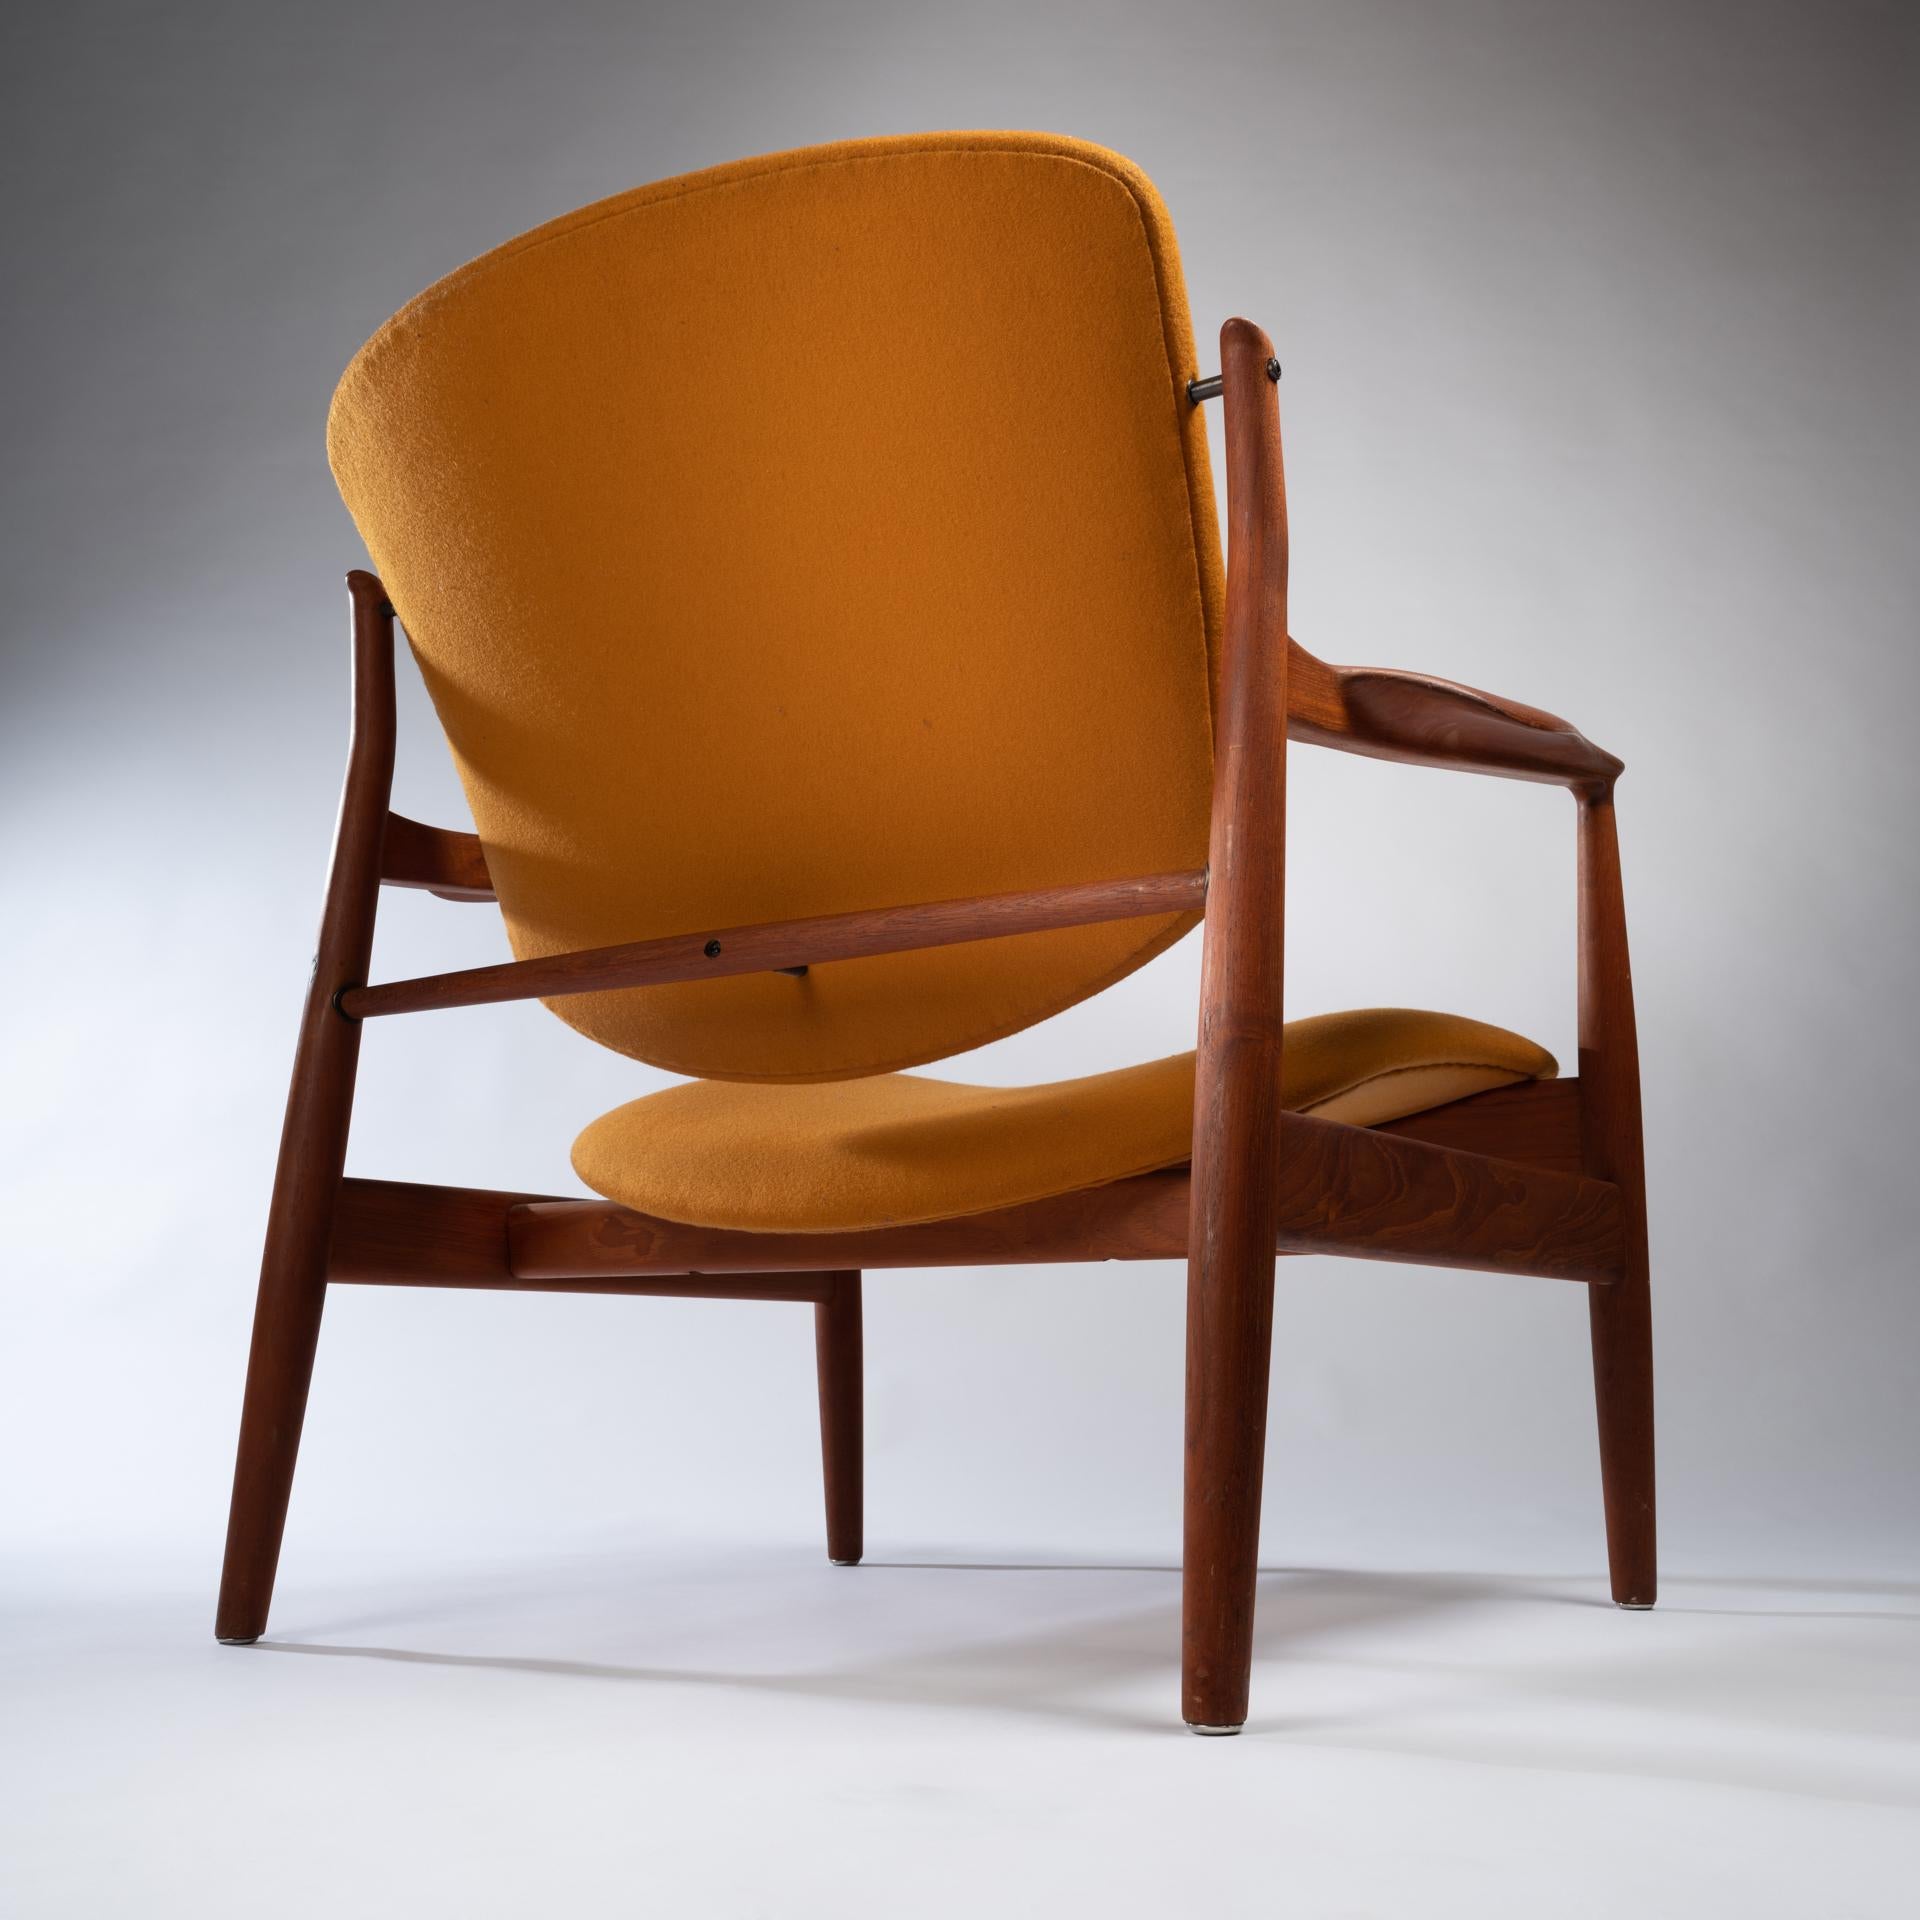 Upholstery Lounge Chair Model Fd136, Designed by Finn Juhl, 1950s For Sale